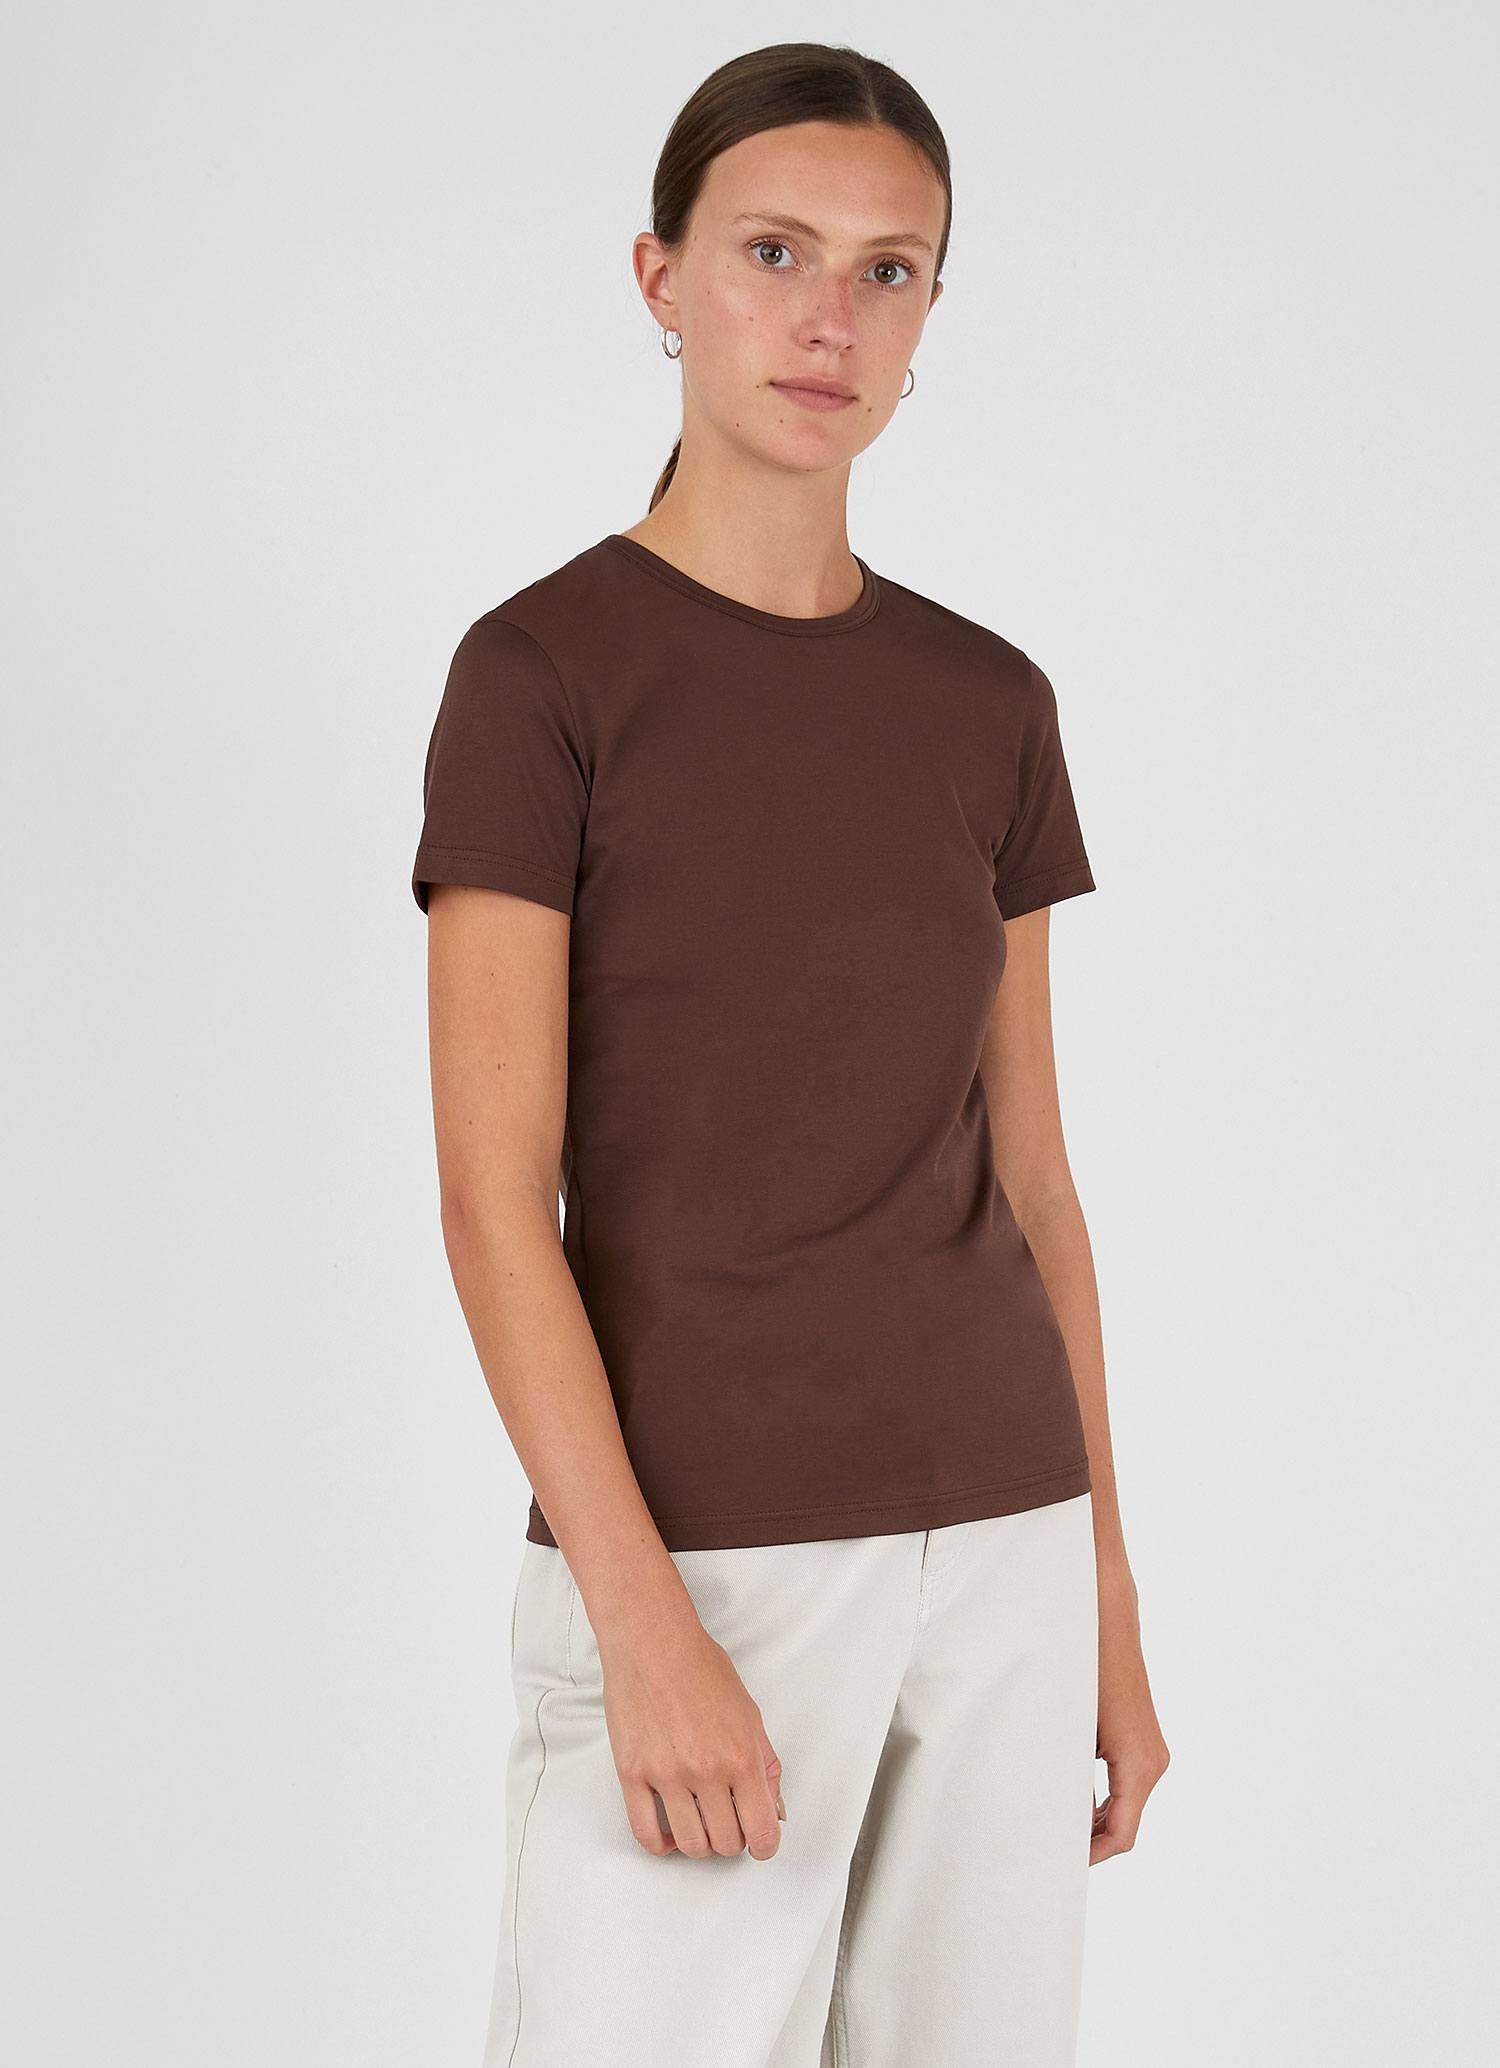 Women's Classic T-shirt in Cocoa